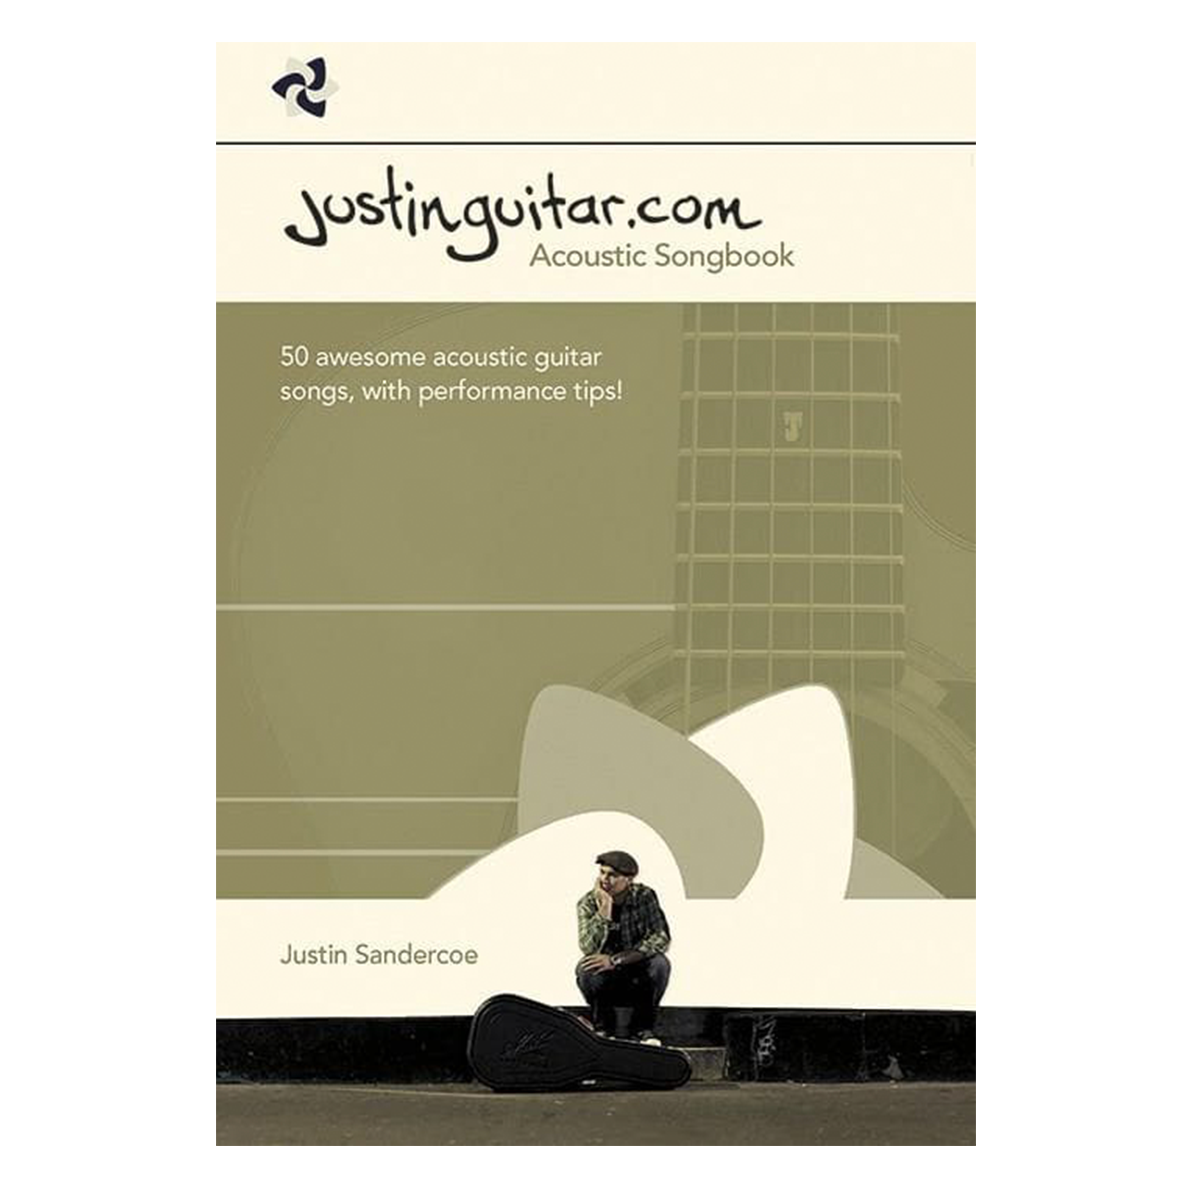 The JustinGuitar.com Acoustic Songbook